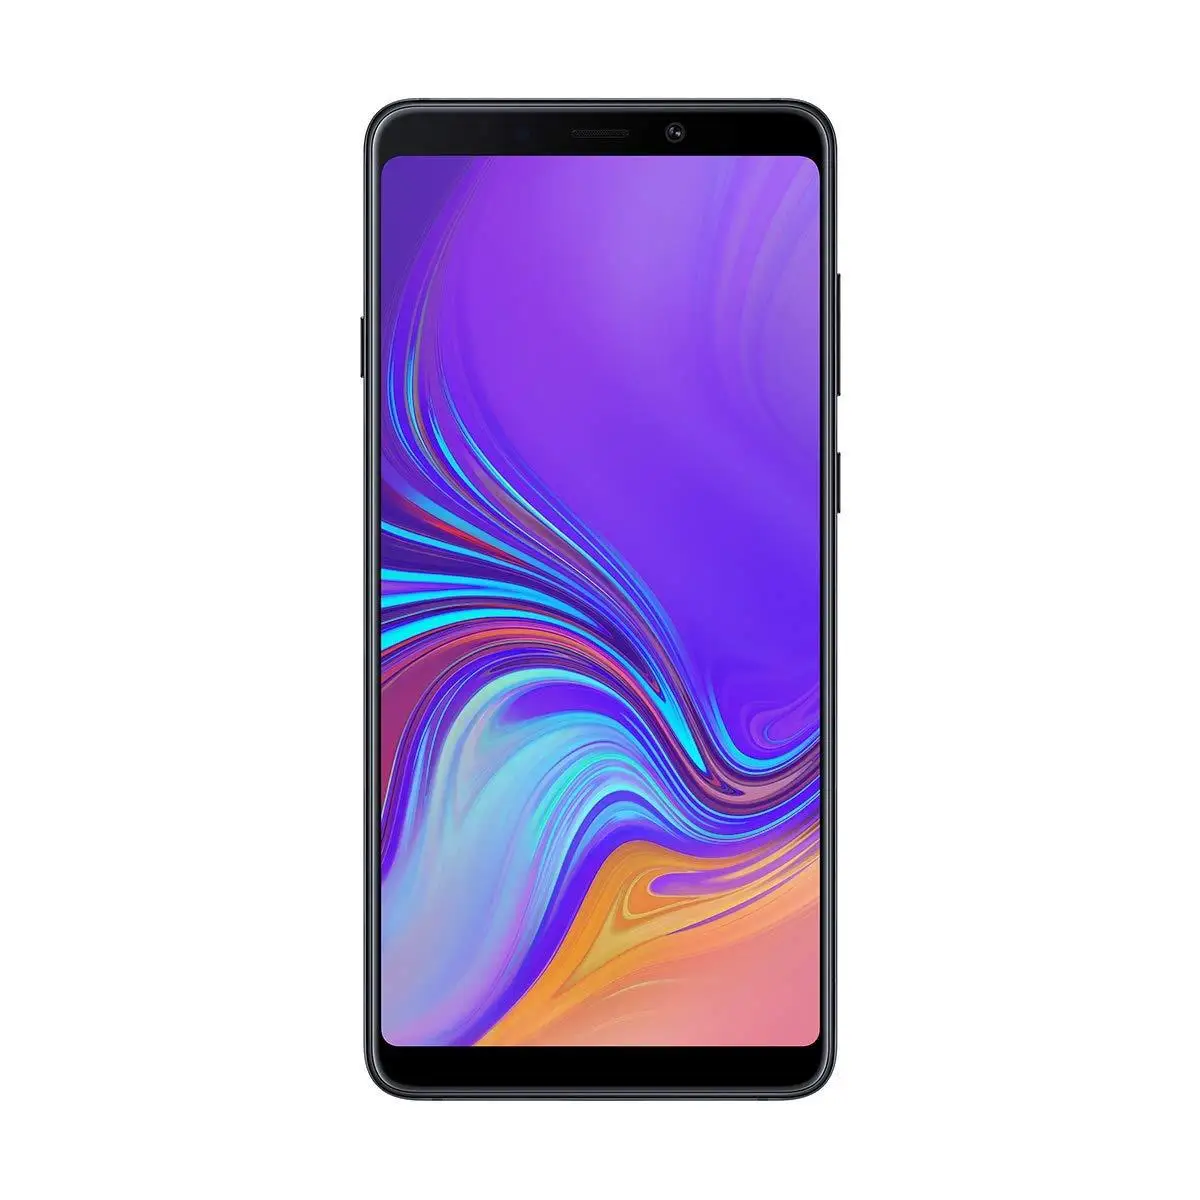 Samsung Galaxy A9 (2018) A920F, группа 4G/LTE/Wi-Fi, Dual SIM, внутренний 128 GB де Memoria, 6 Жесткий GB Оперативная память, (Восьмиядерный), PA